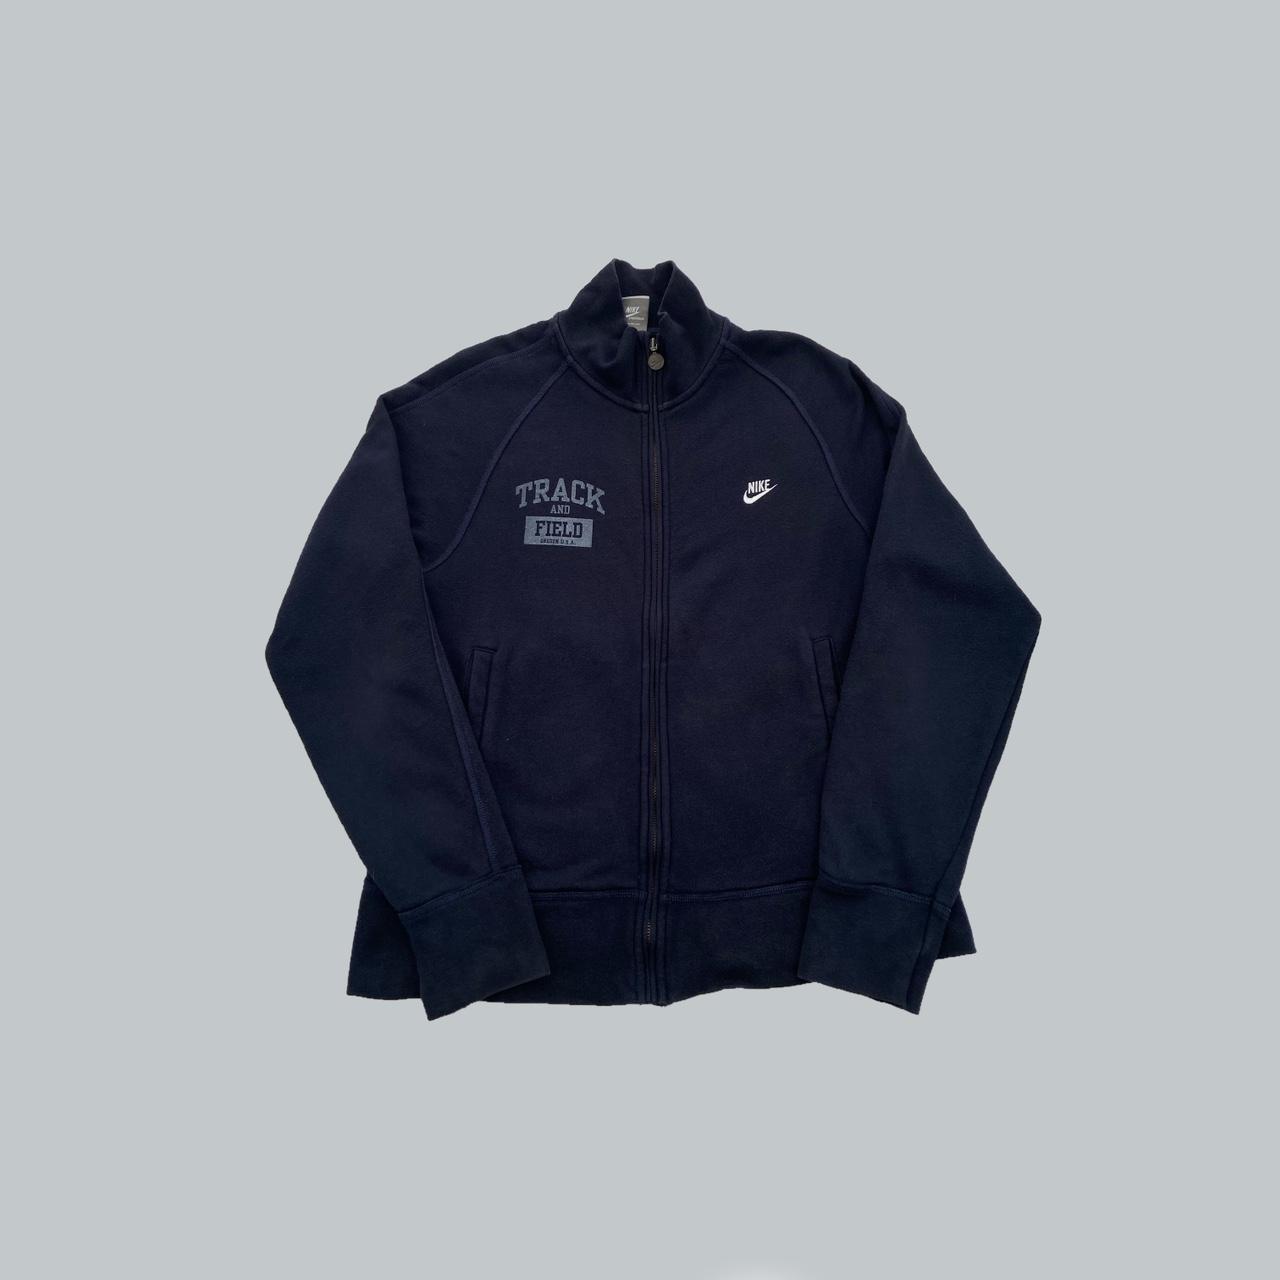 Vintage Nike Jacket Navy full zip with the white... - Depop